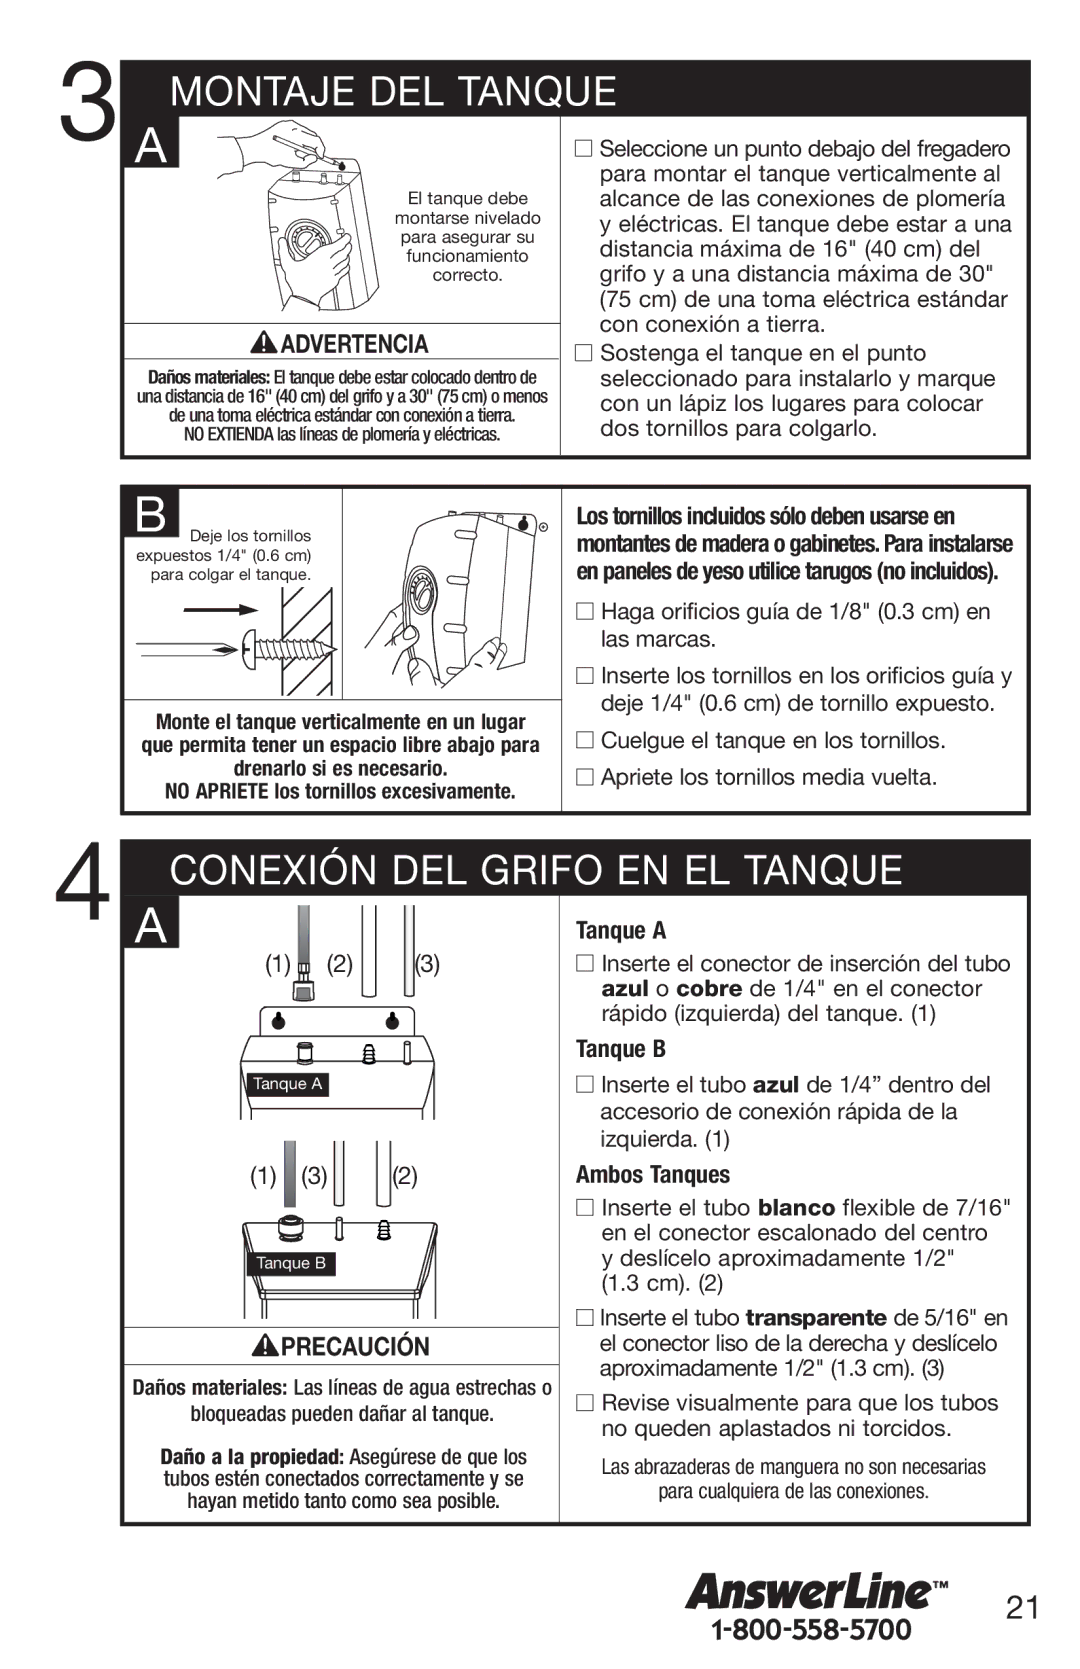 InSinkErator 1100 owner manual Montaje DEL Tanque, Conexión DEL Grifo EN EL Tanque, Tanque a, Tanque B, Ambos Tanques 